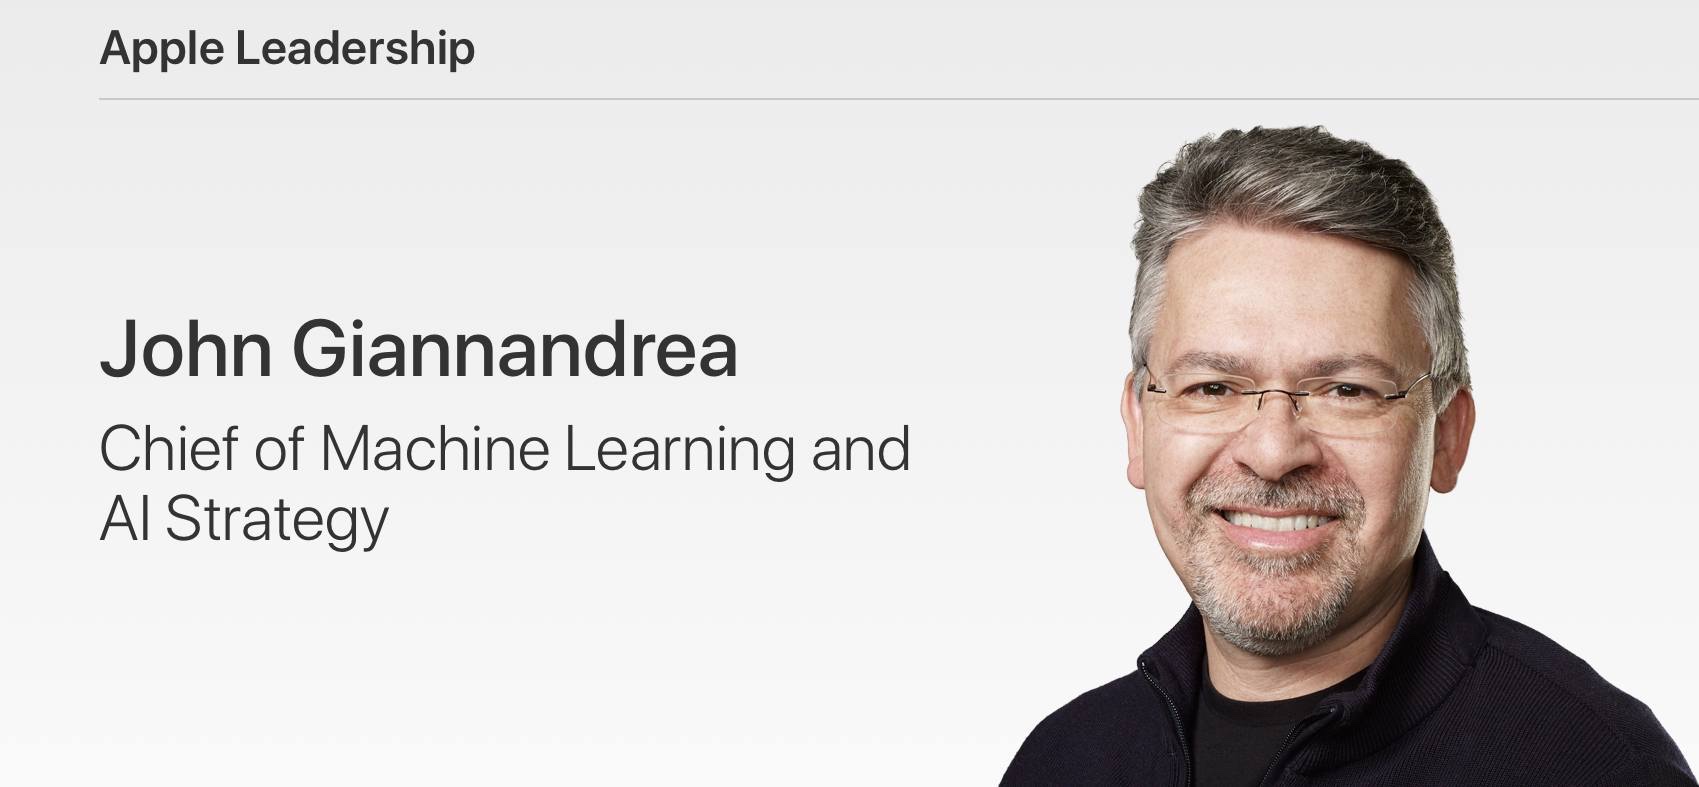 John Giannandrea named to Apple’s executive team